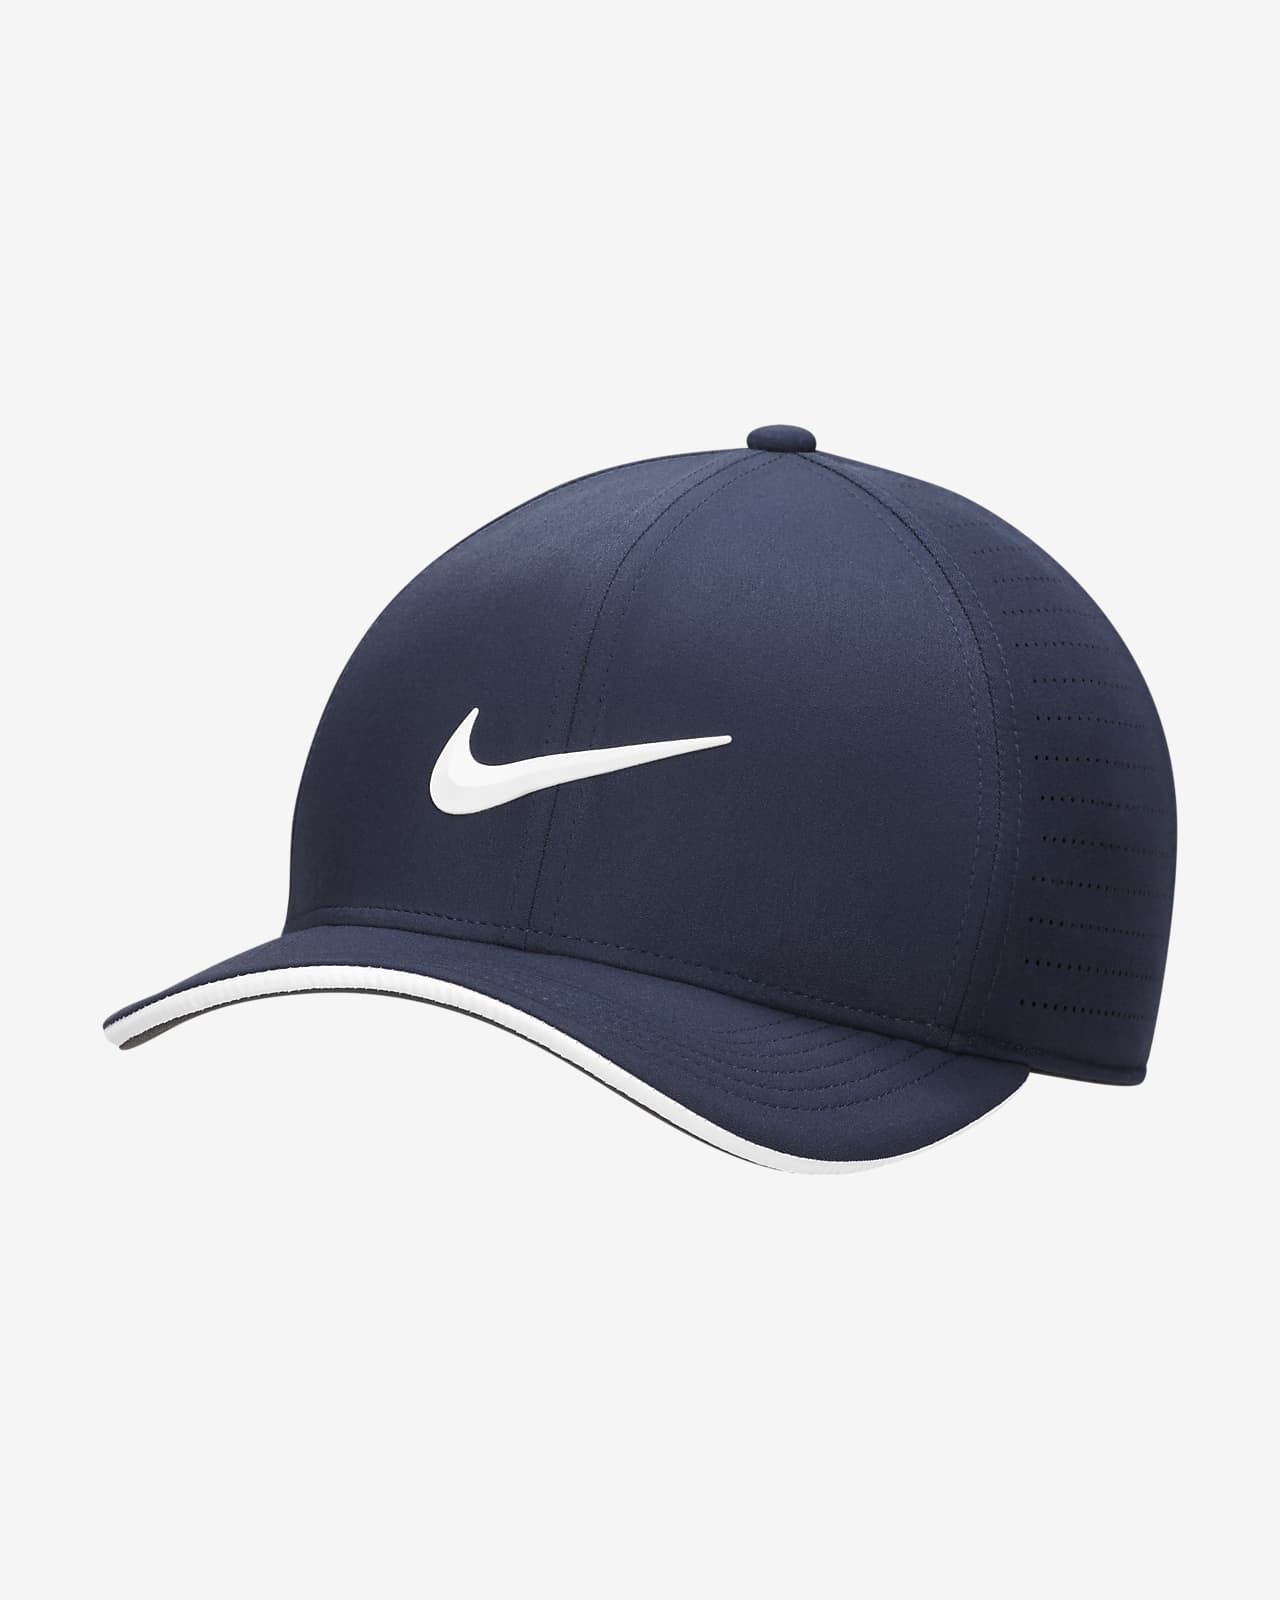 Monet Demonstreer Walging Nike Dri-FIT ADV Classic99 Perforated Golf Hat. Nike PT